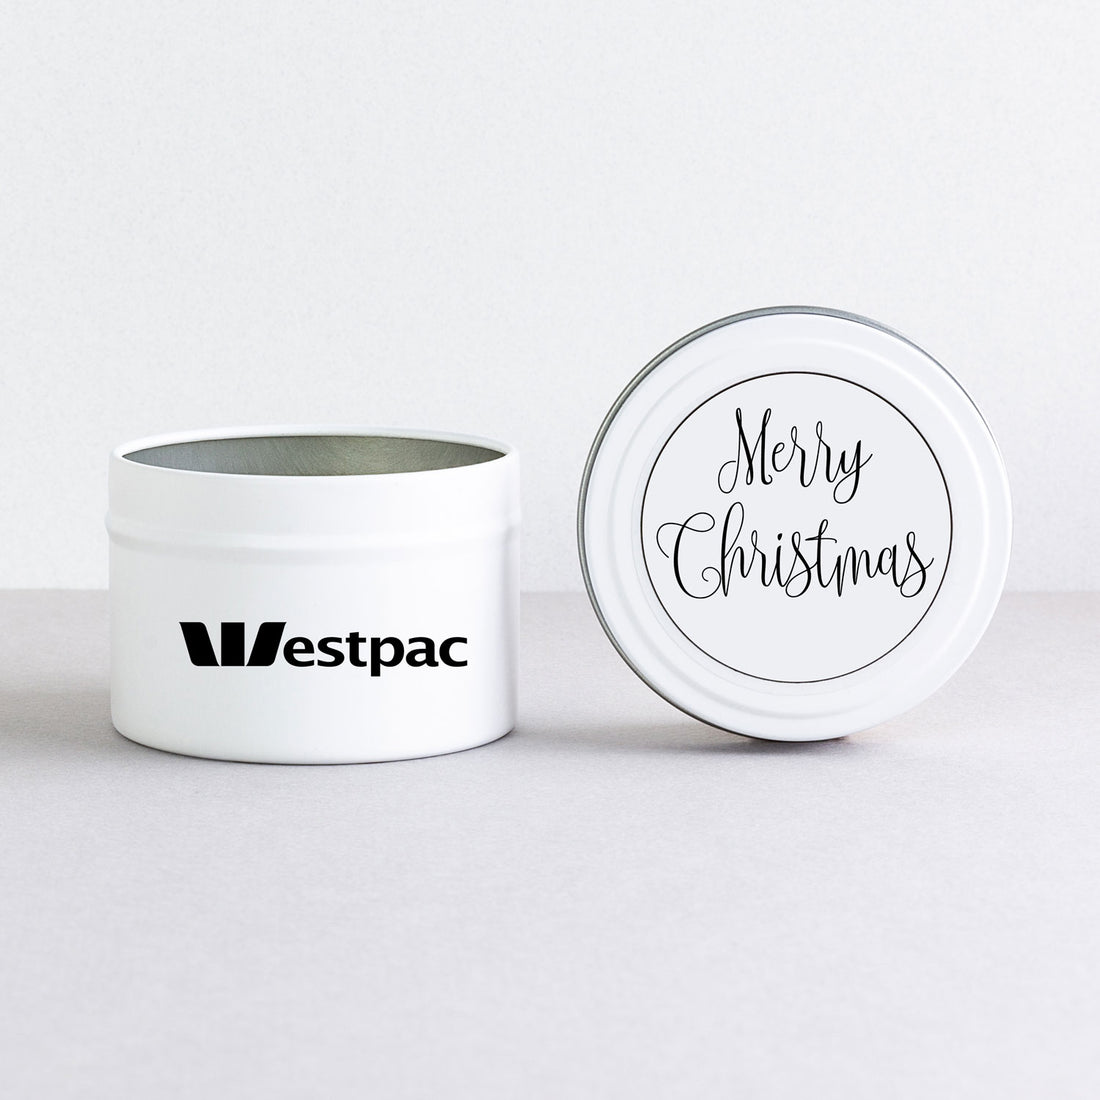 Corporate Christmas Gift - Custom Candle